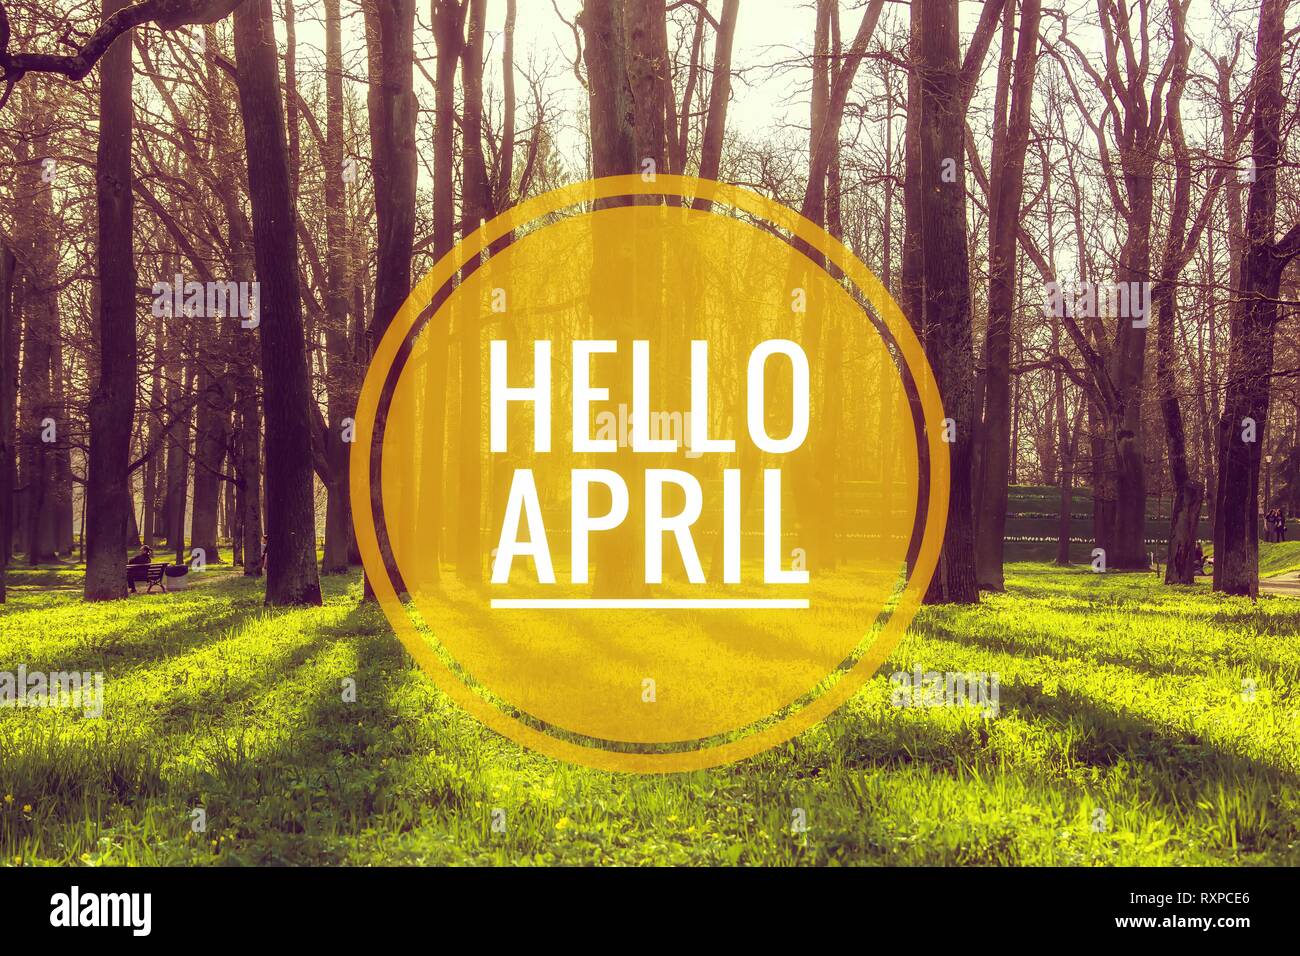 Hello waiting. Hello April картинки. Welcome апрель картинки. Привет апрель доброе. Привет апрель бизнес картинки.